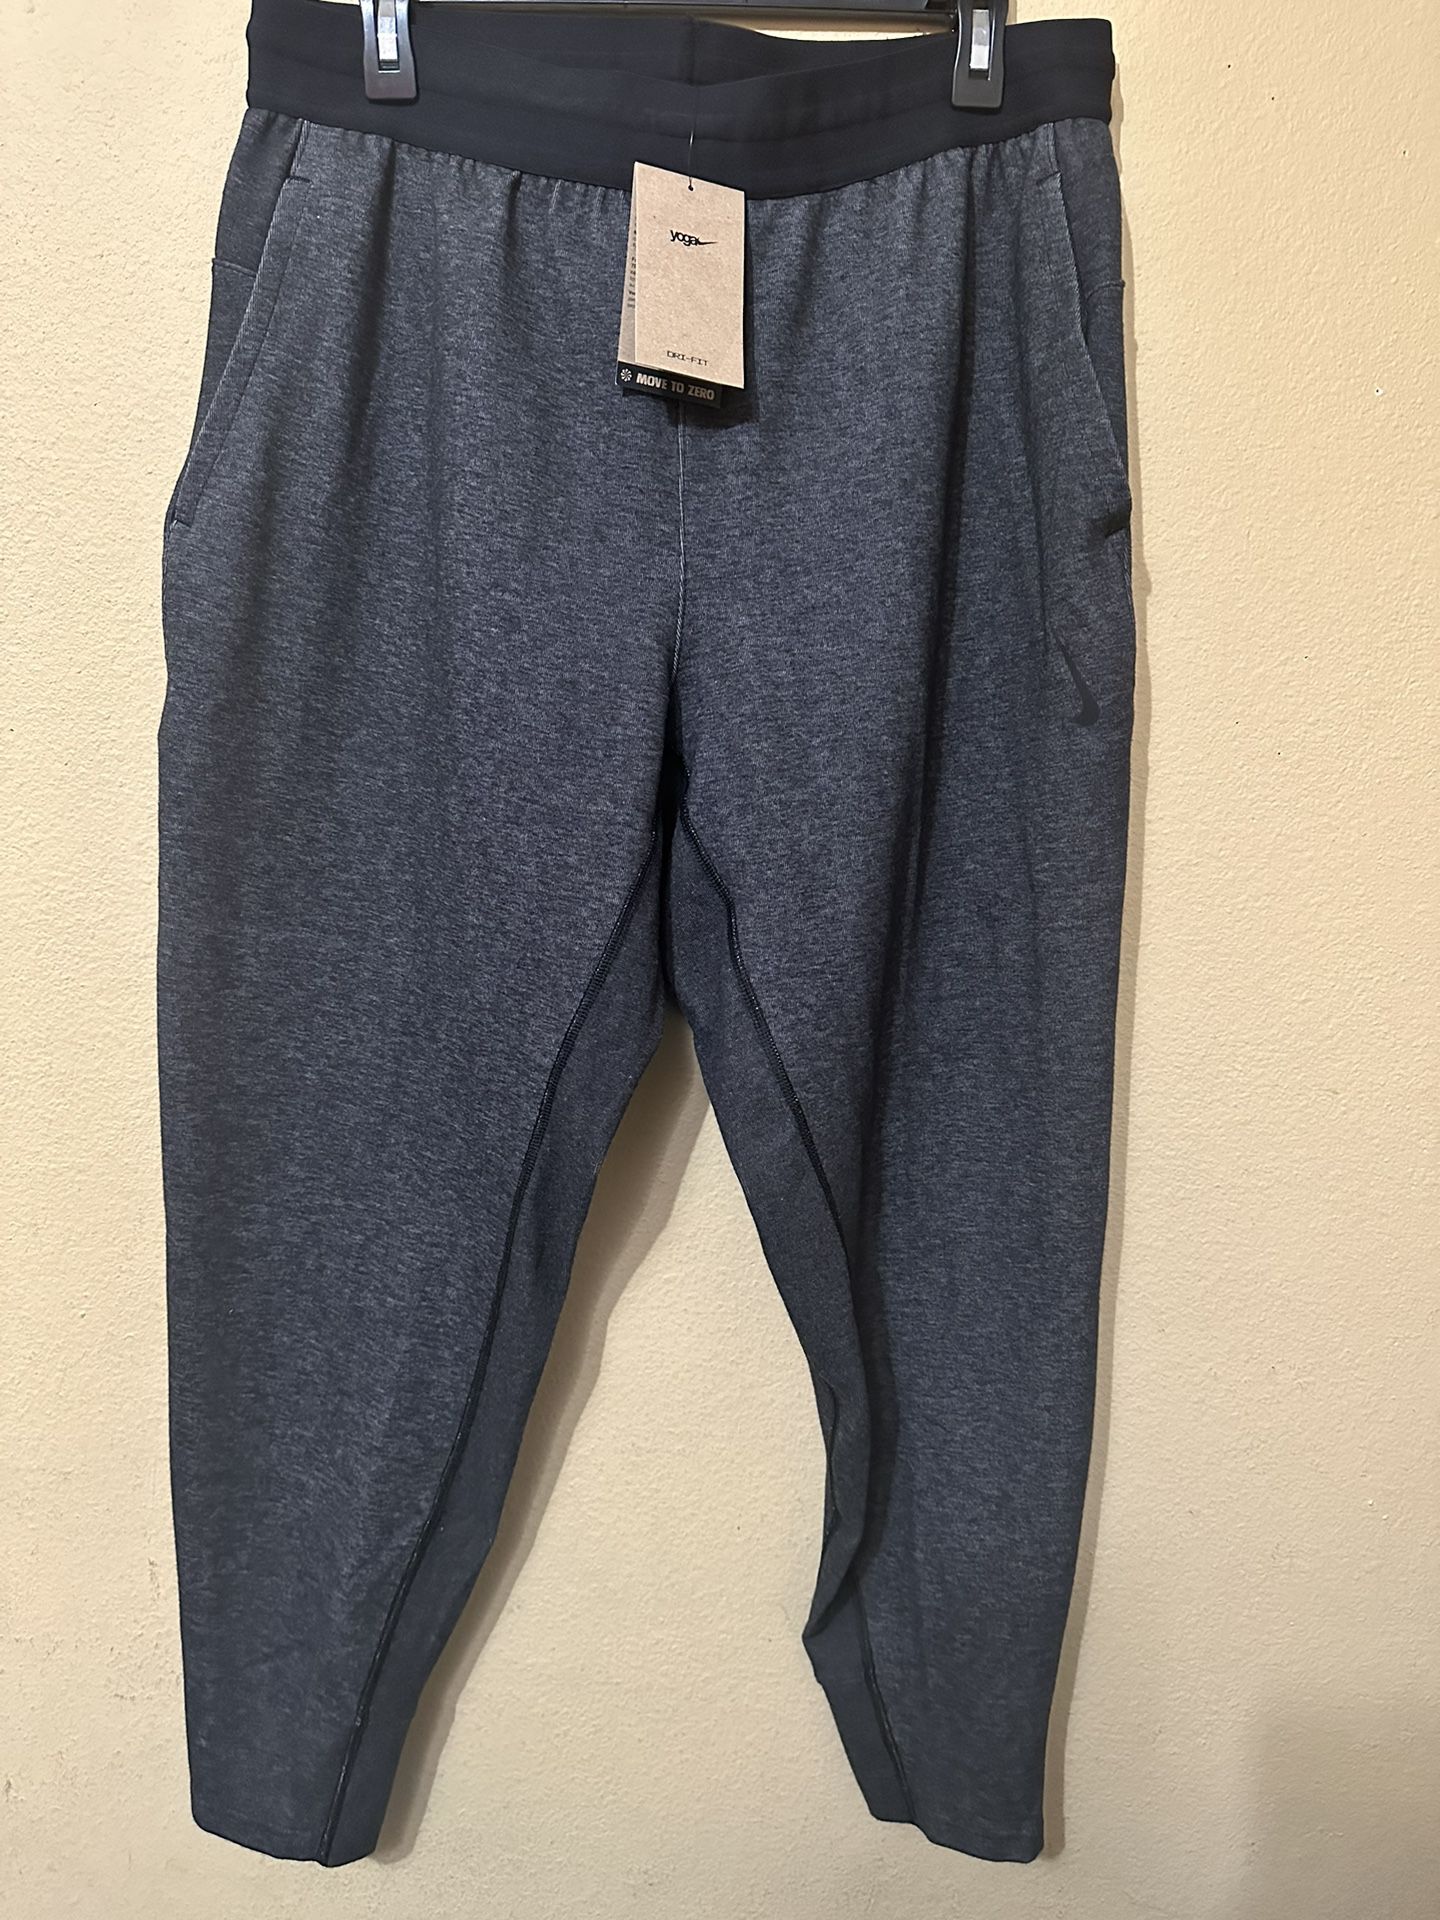 Nike Yoga Men’s Pants, Size # L , $ 35 Firm 